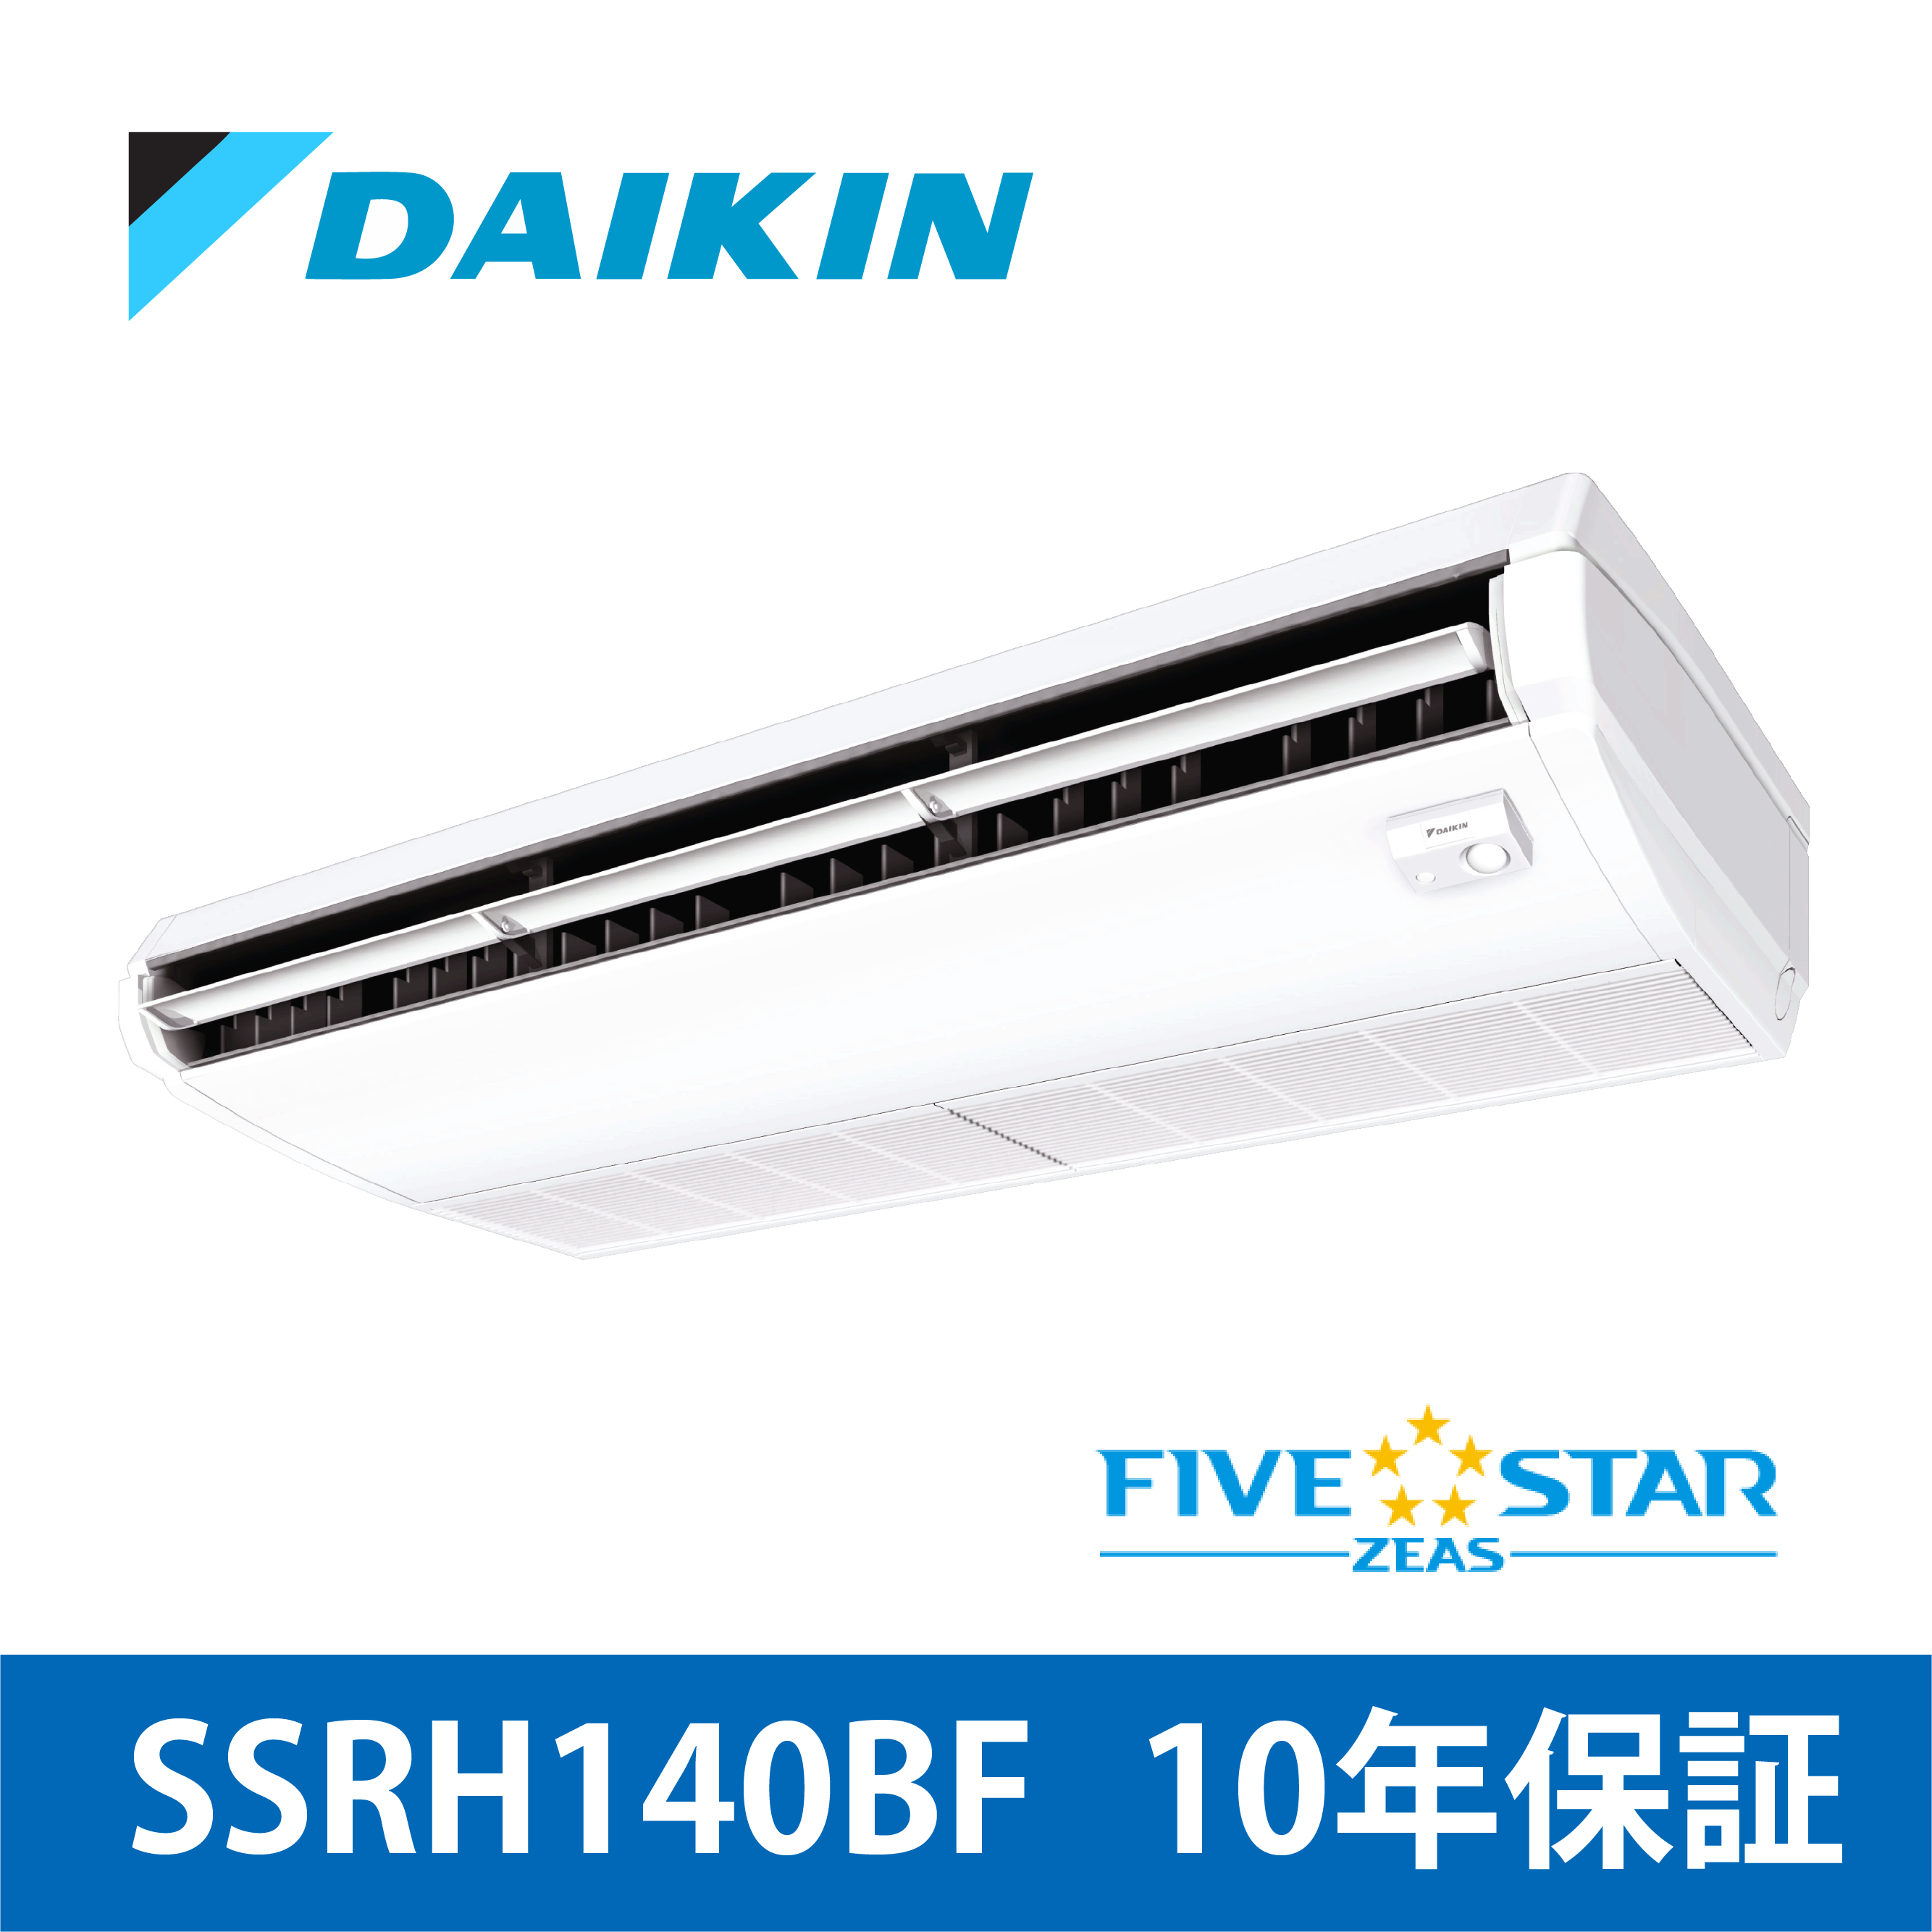 SSRH140BF【ダイキン】天井吊形 〈センシング〉タイプ FIVE STAR ZEAS